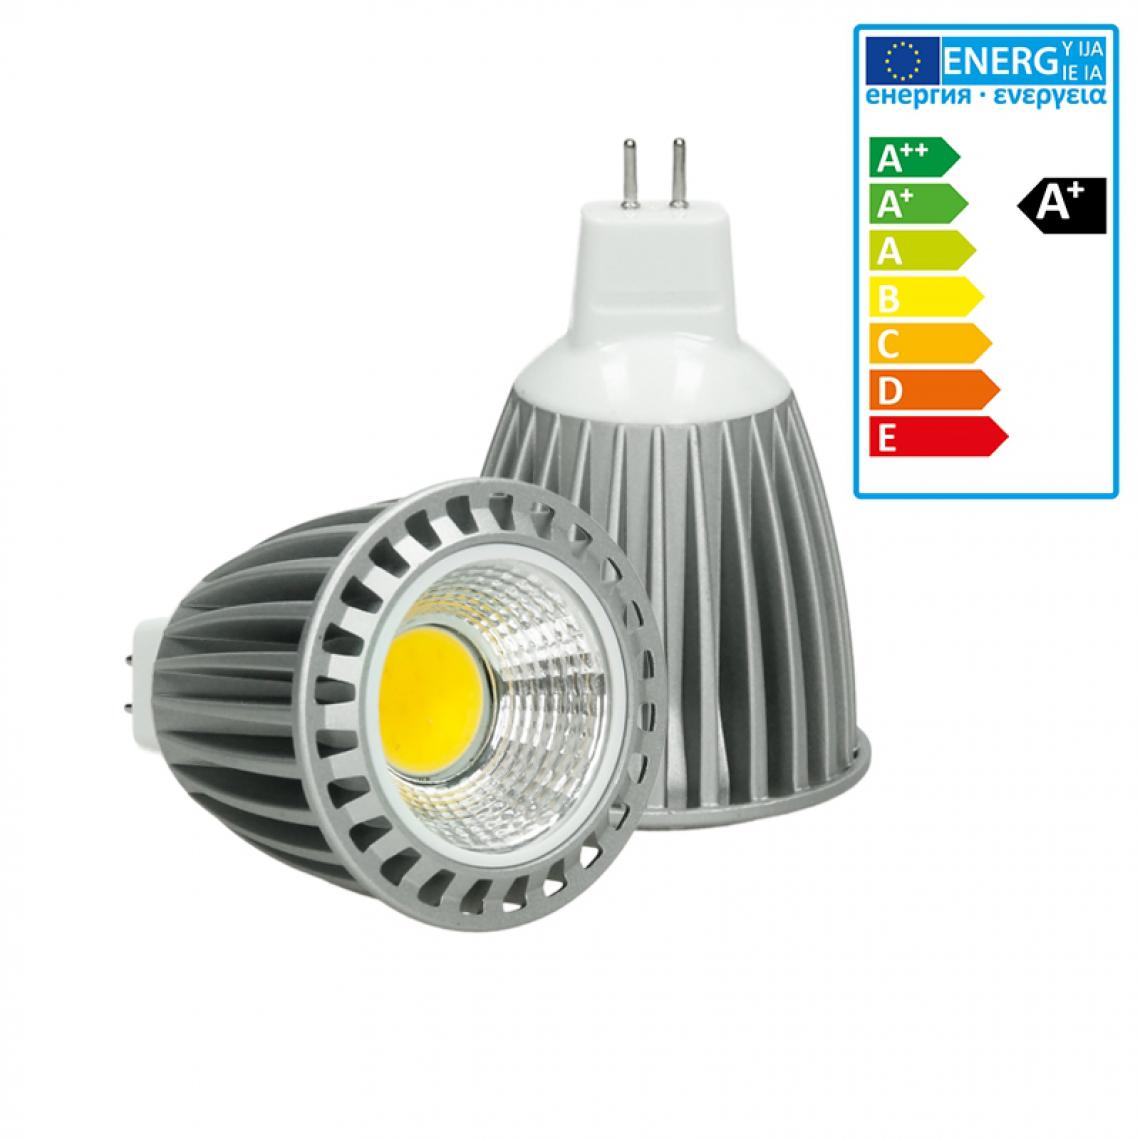 Ecd Germany - ECD Germany LED COB MR16 Spot Lampe Ampoule 9W blanc chaud - Ampoules LED